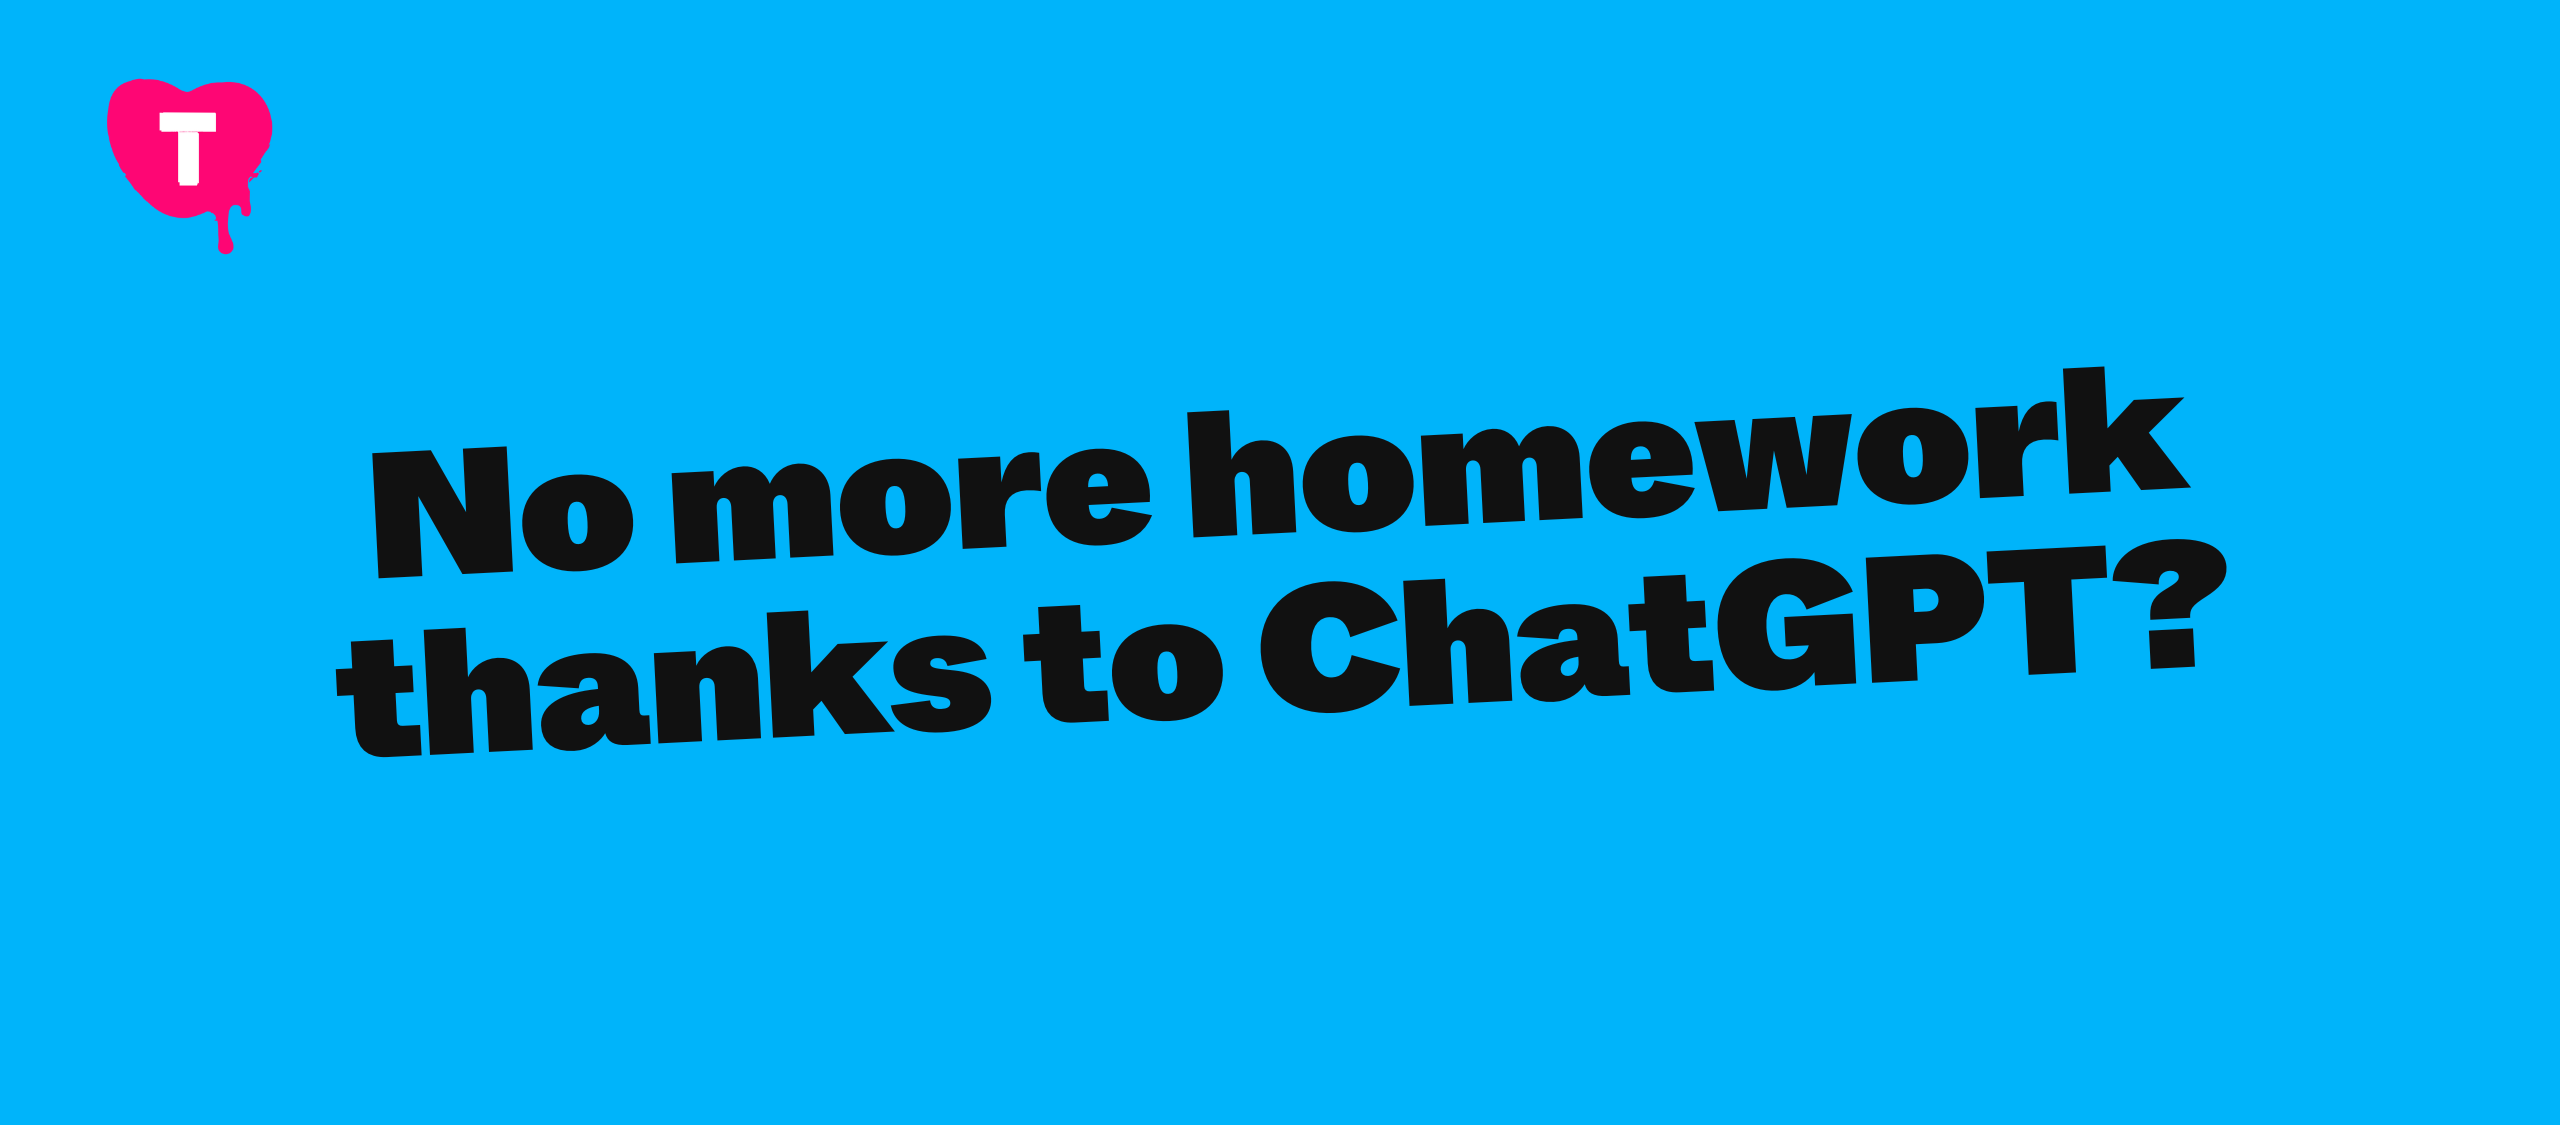 No more homework thanks to ChatGPT?